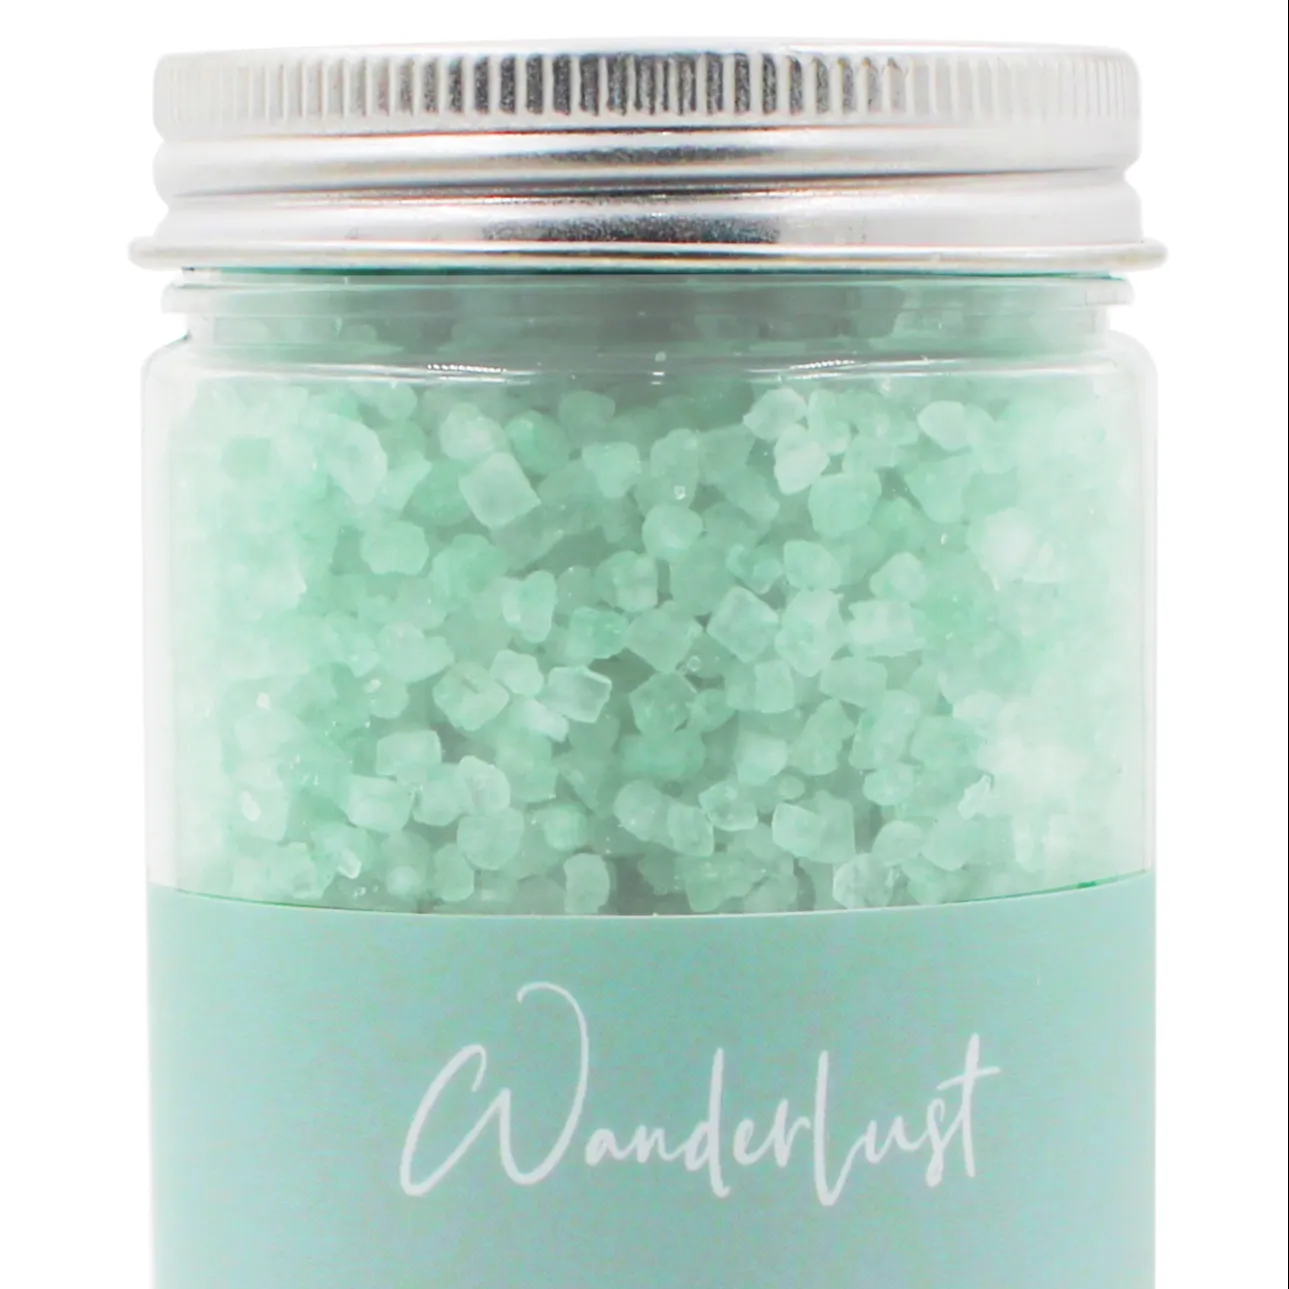 Etiqueta privada de luxo, aromaterapia vegana natural perfumado spa relaxamento cor cristal mergulhar banho sal